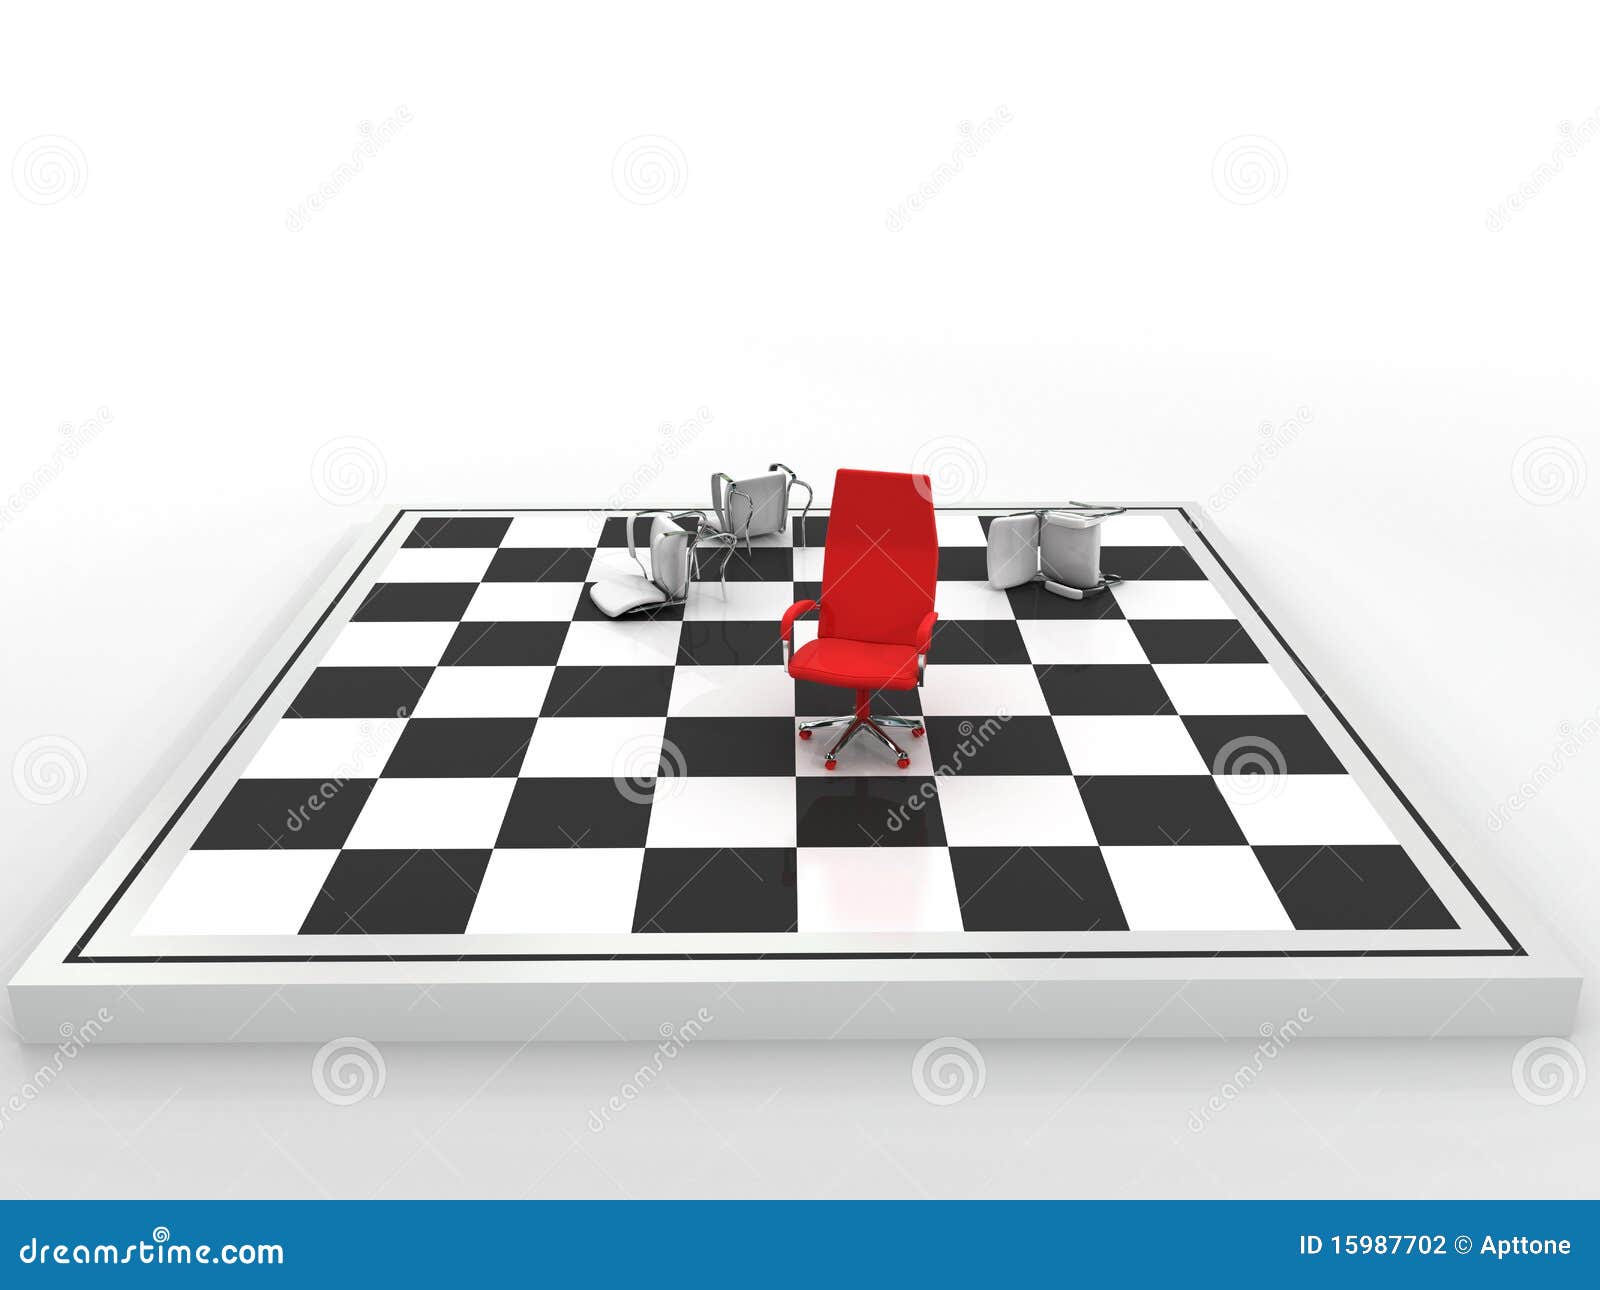 Chess strategy stock illustration. Illustration of board - 10259194